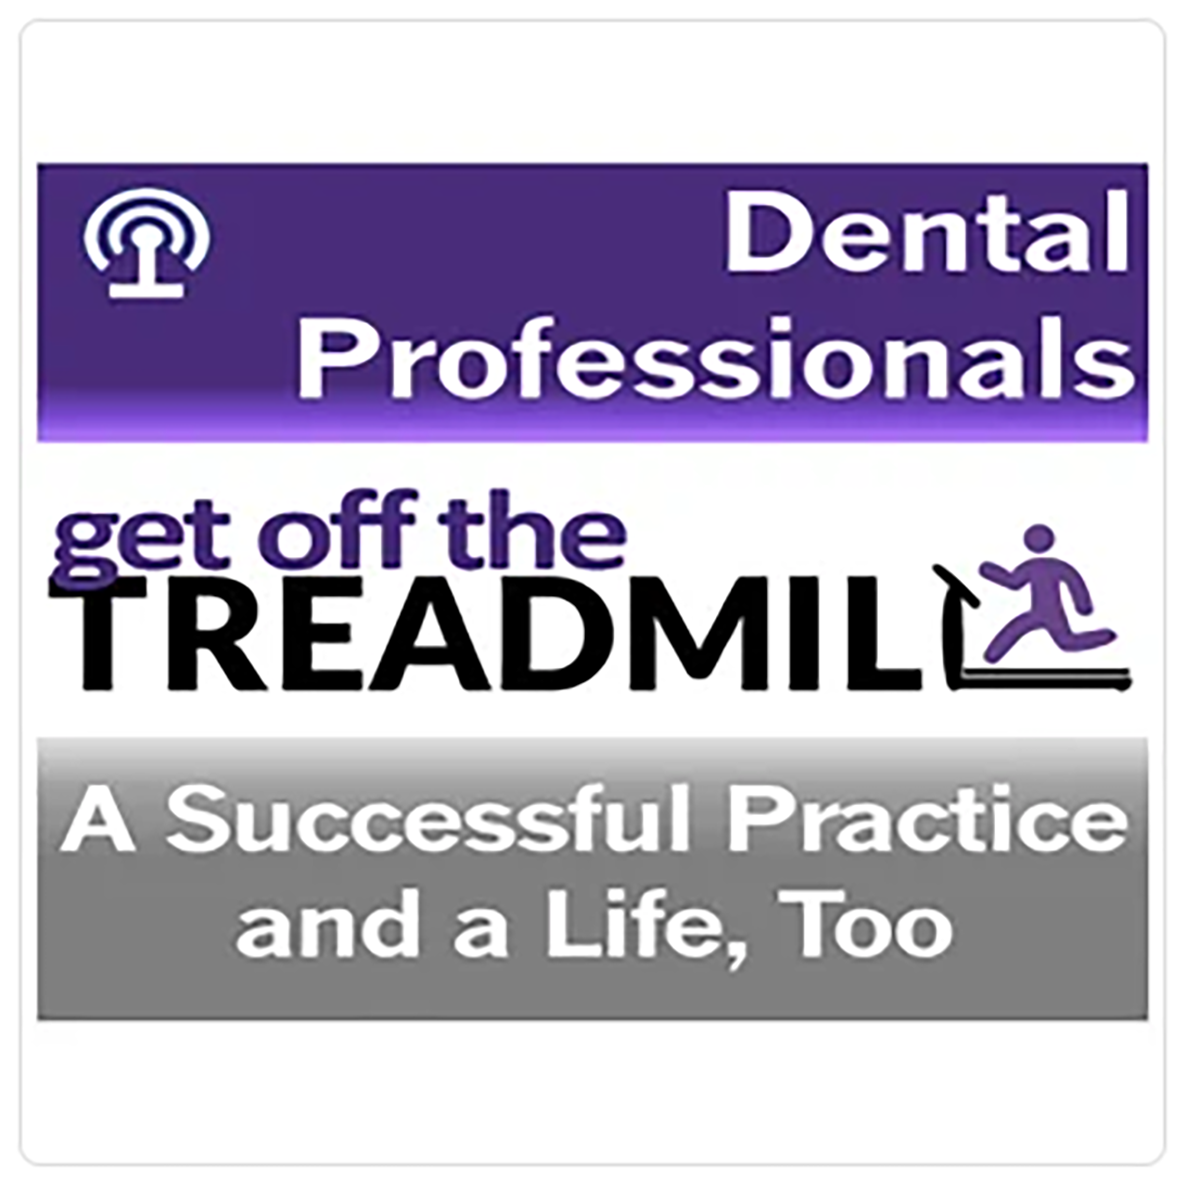 Dental Professionals Get Off the Treadmill podcast logo